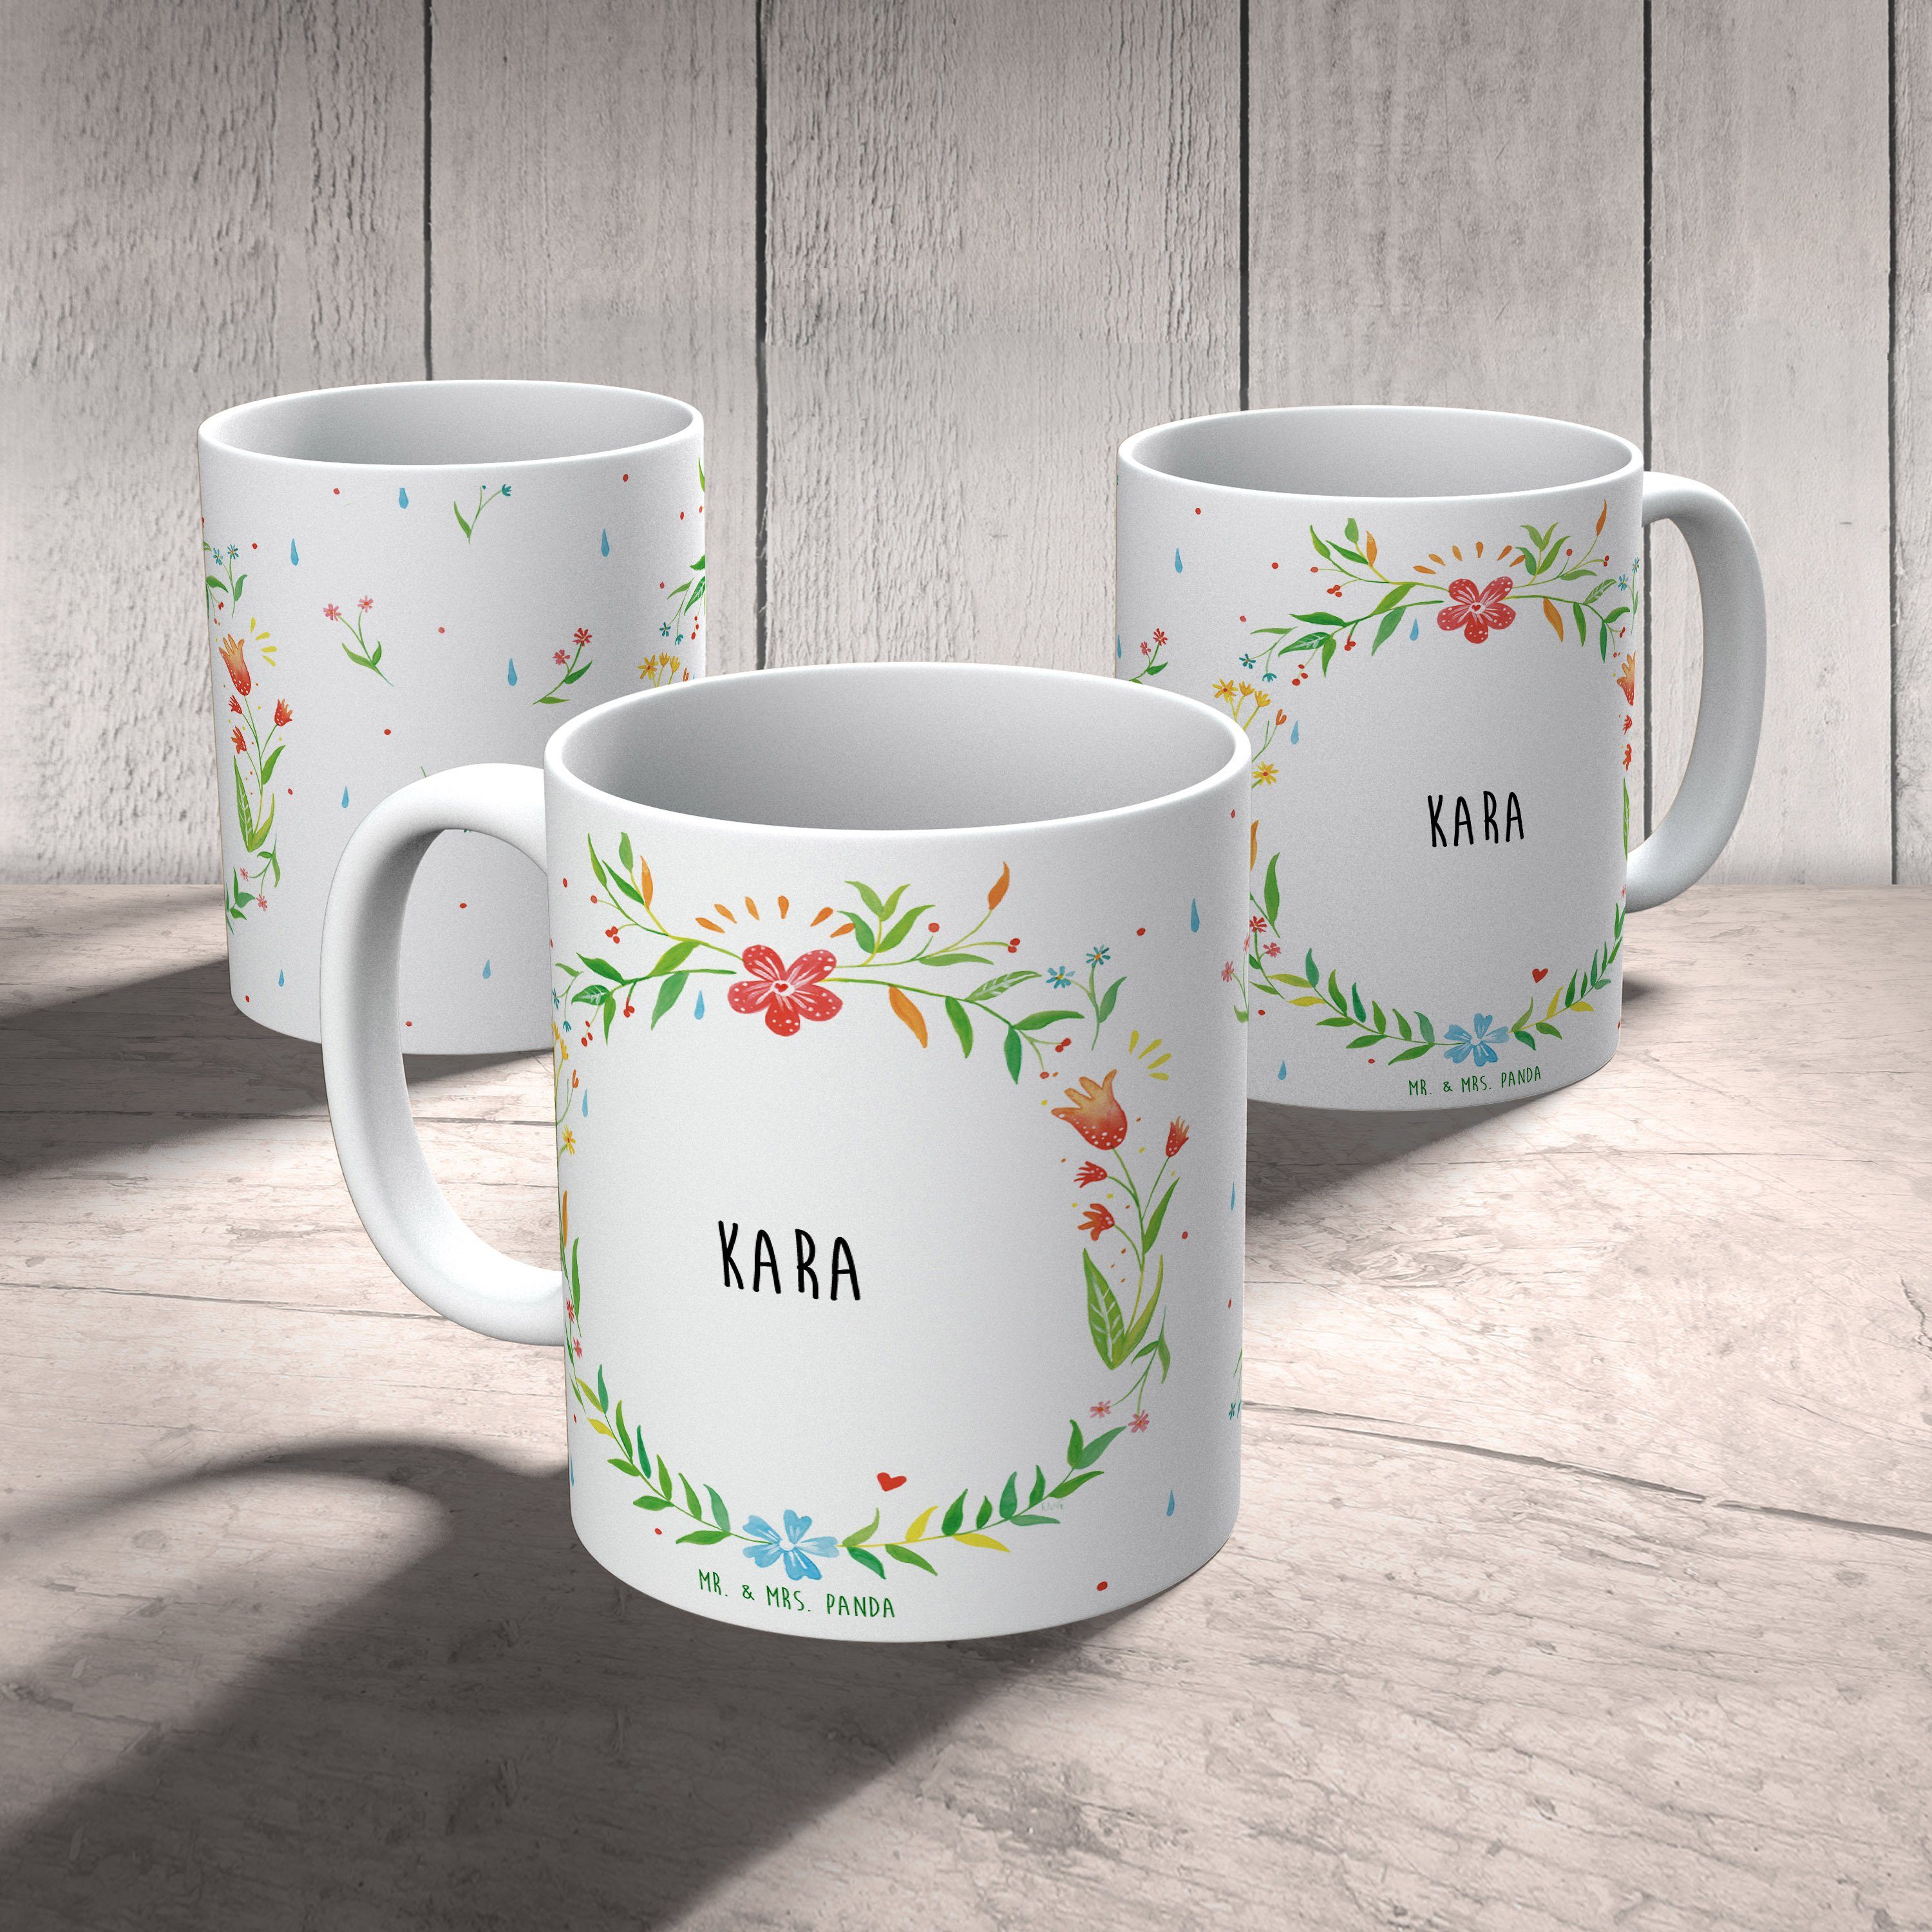 Mr. & Mrs. Panda Tasse Teetasse, Porzella, Keramik Tasse, - Geschenk, Kara Kaffeetasse, Kaffeebecher